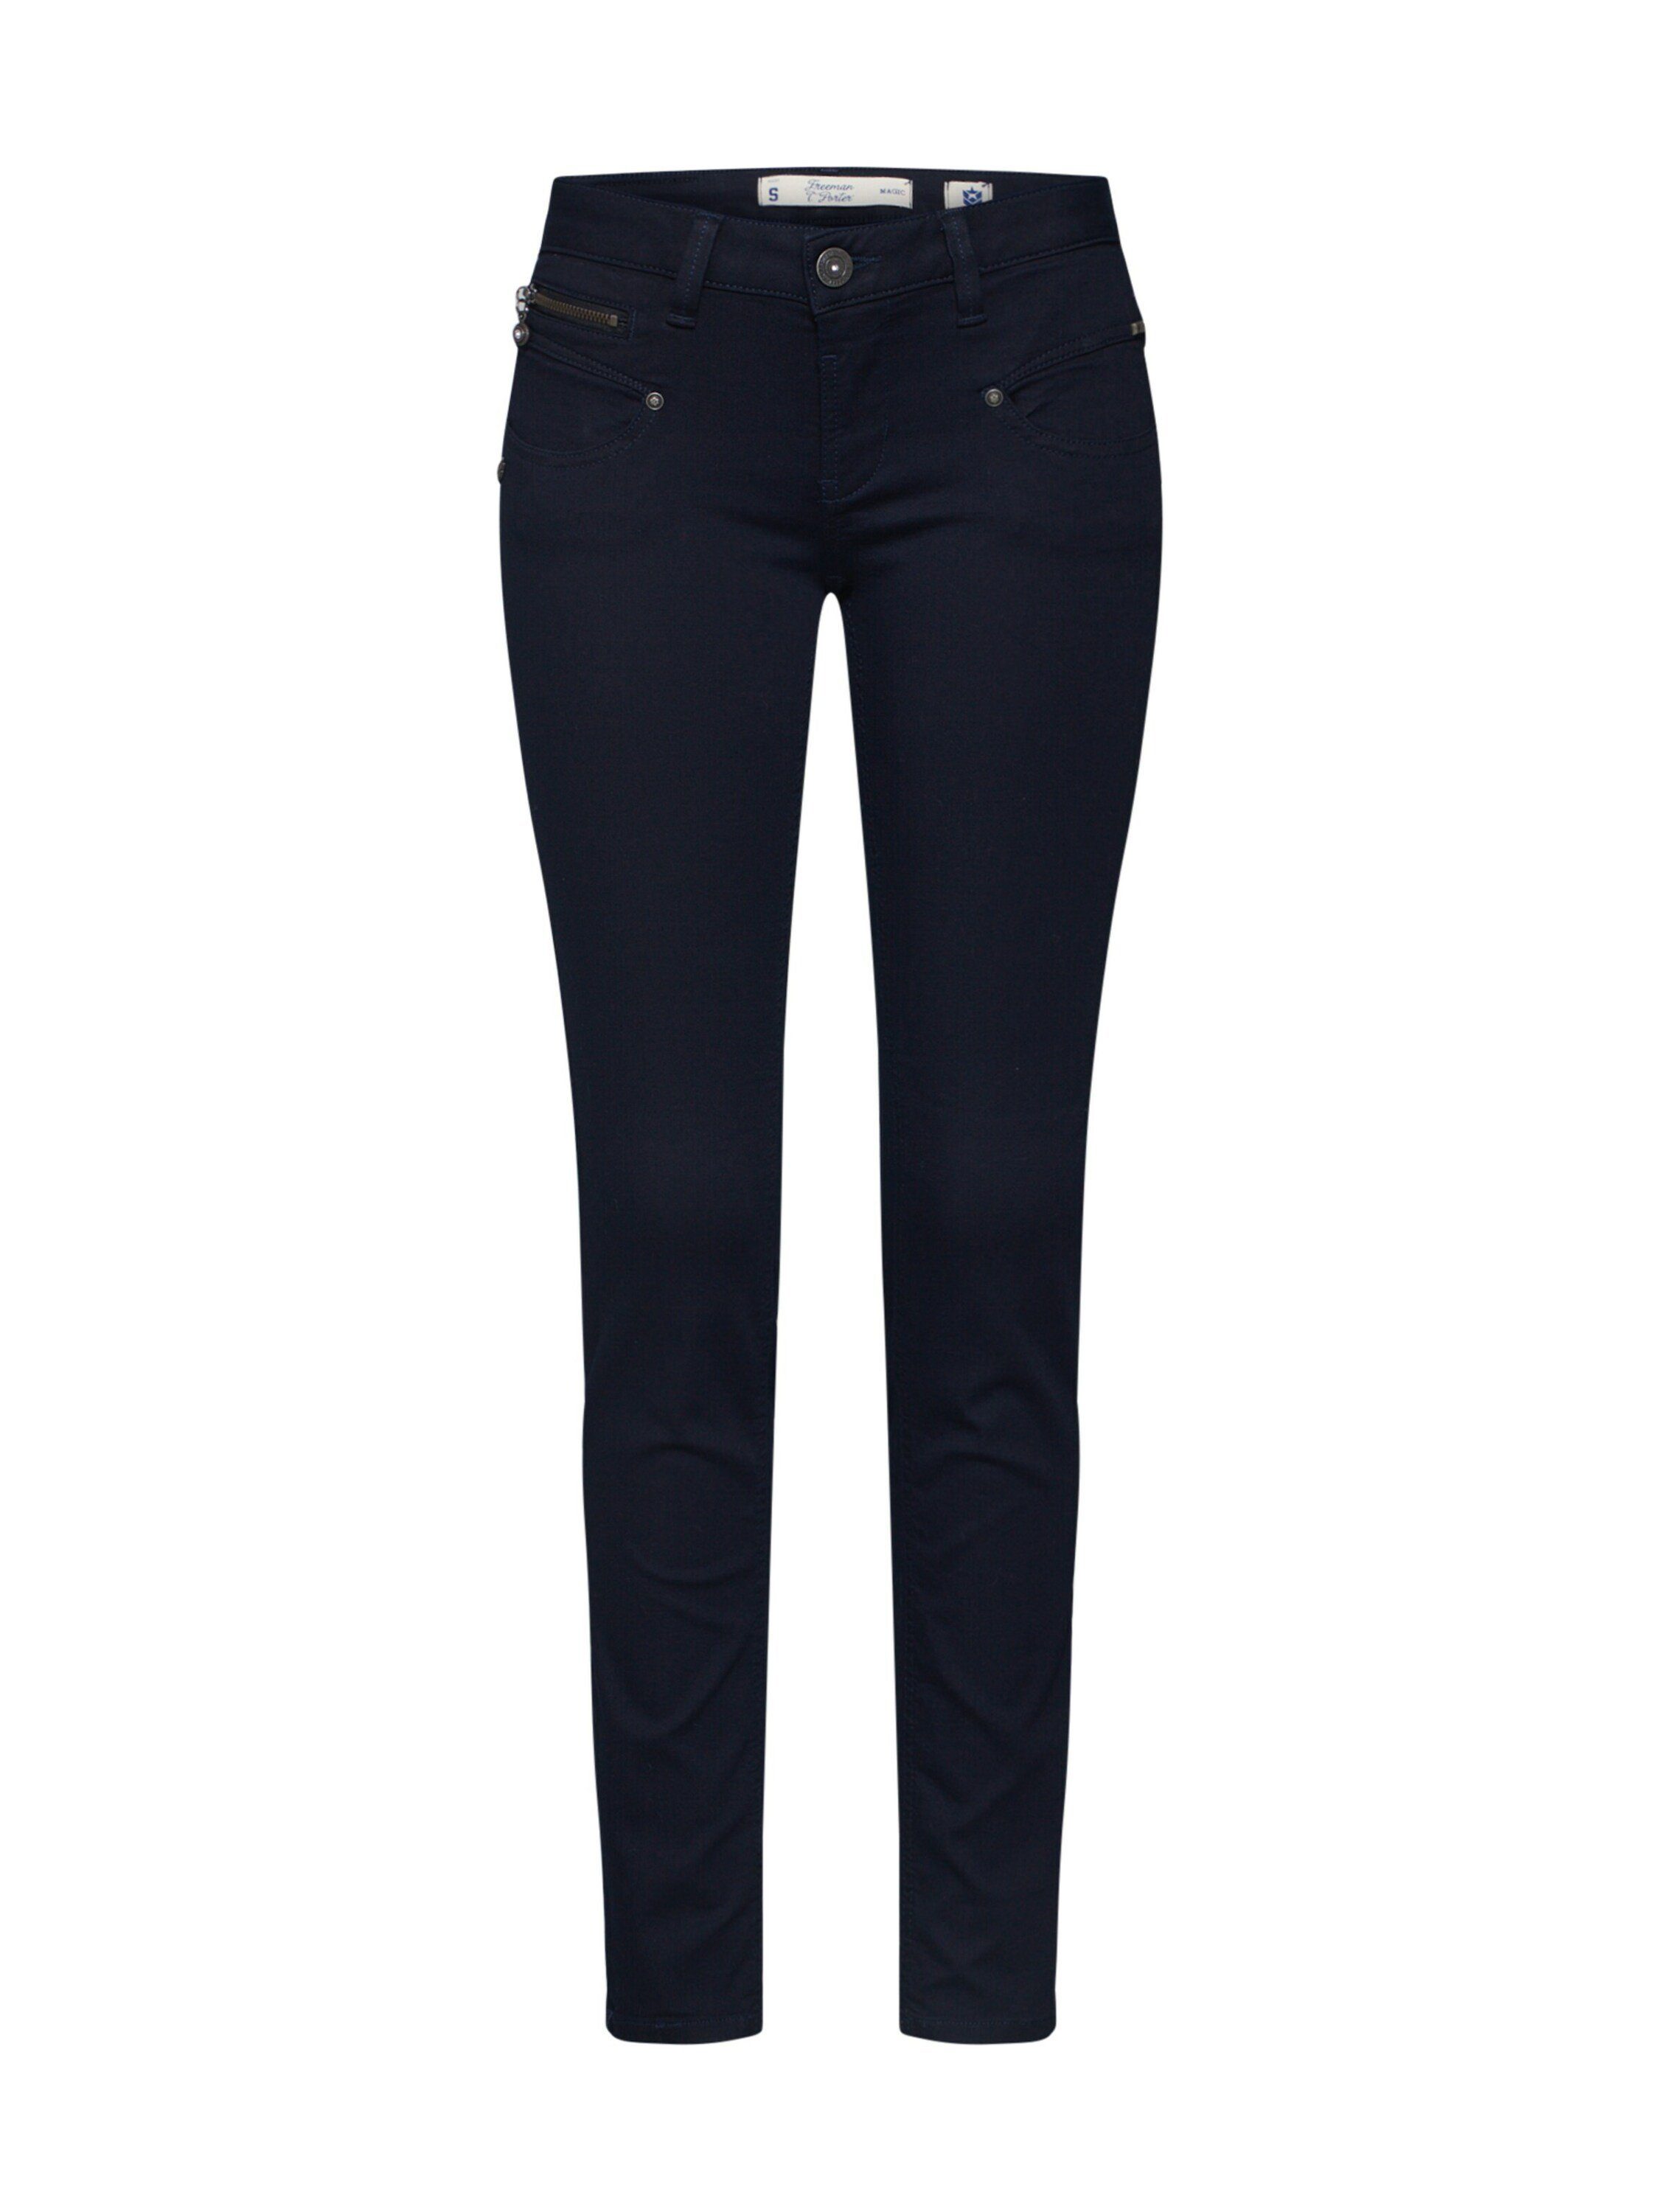 Weiteres Plain/ohne Porter Freeman flora Alexa Details, F0082 T. (1-tlg) Slim-fit-Jeans Detail